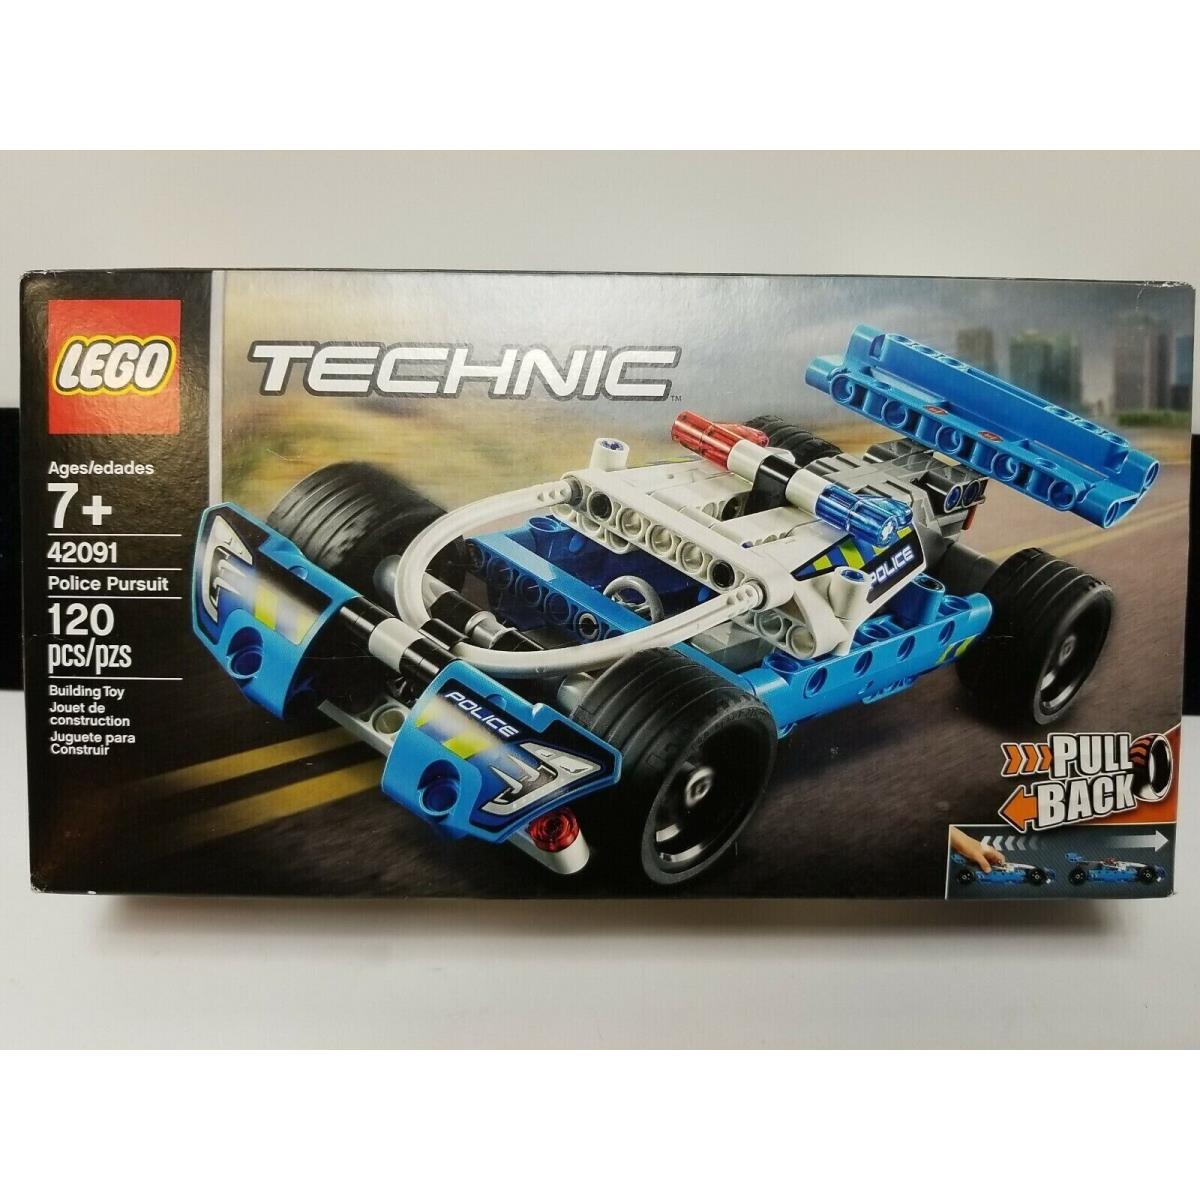 Lego Technic Police Pursuit 42091 Building Kit 120 Pcs Retired Set